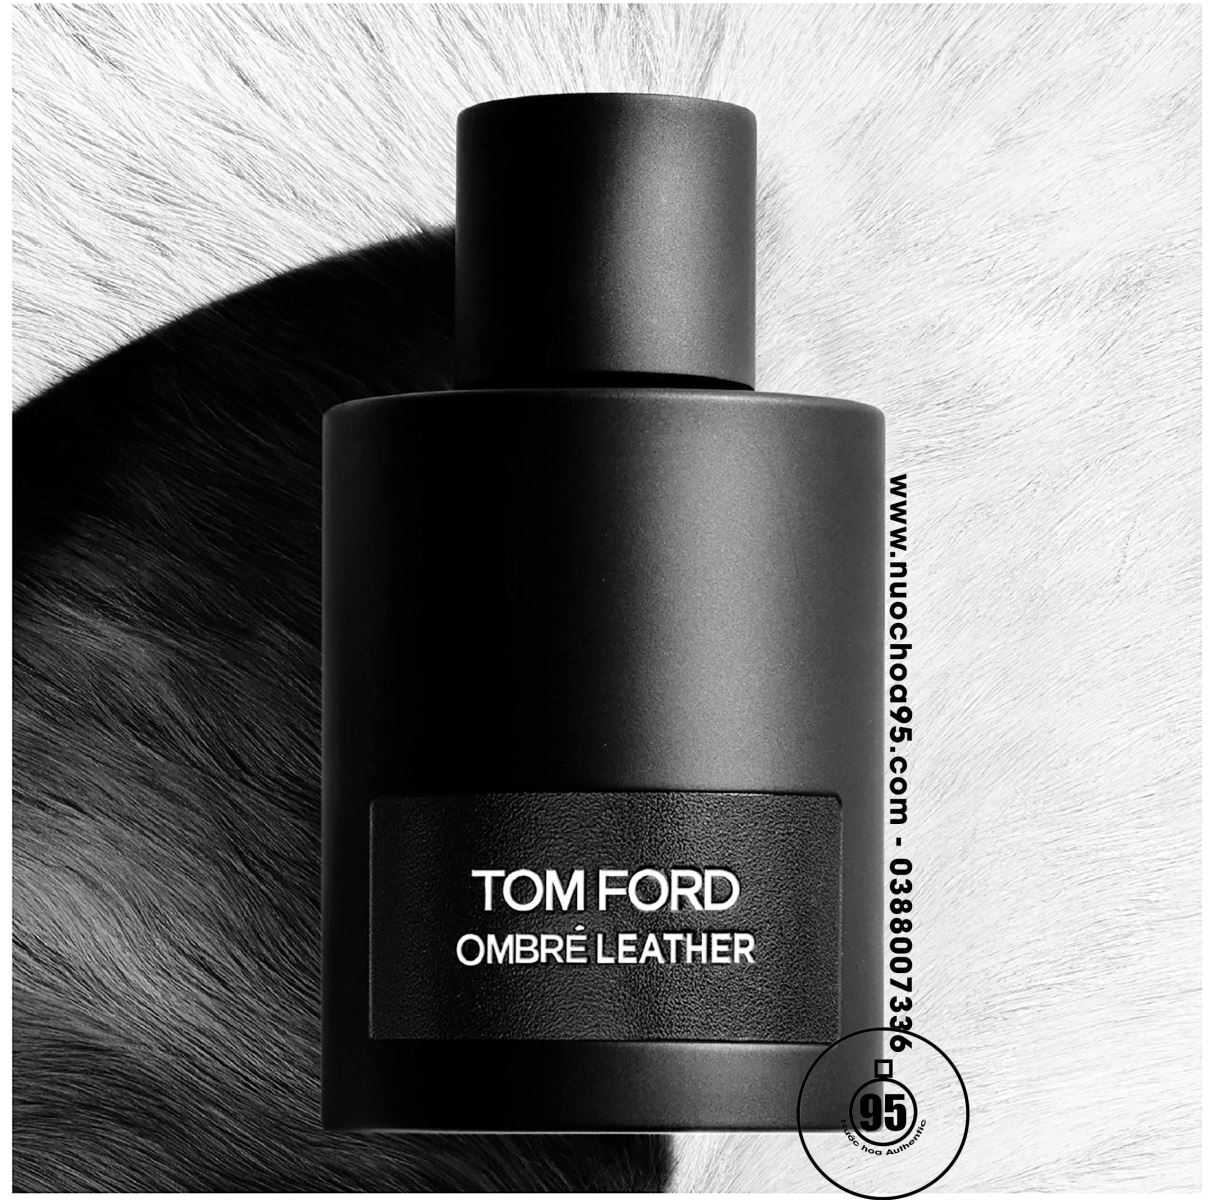 Nước hoa Tom Ford Ombré Leather (2018)  - Ảnh 2